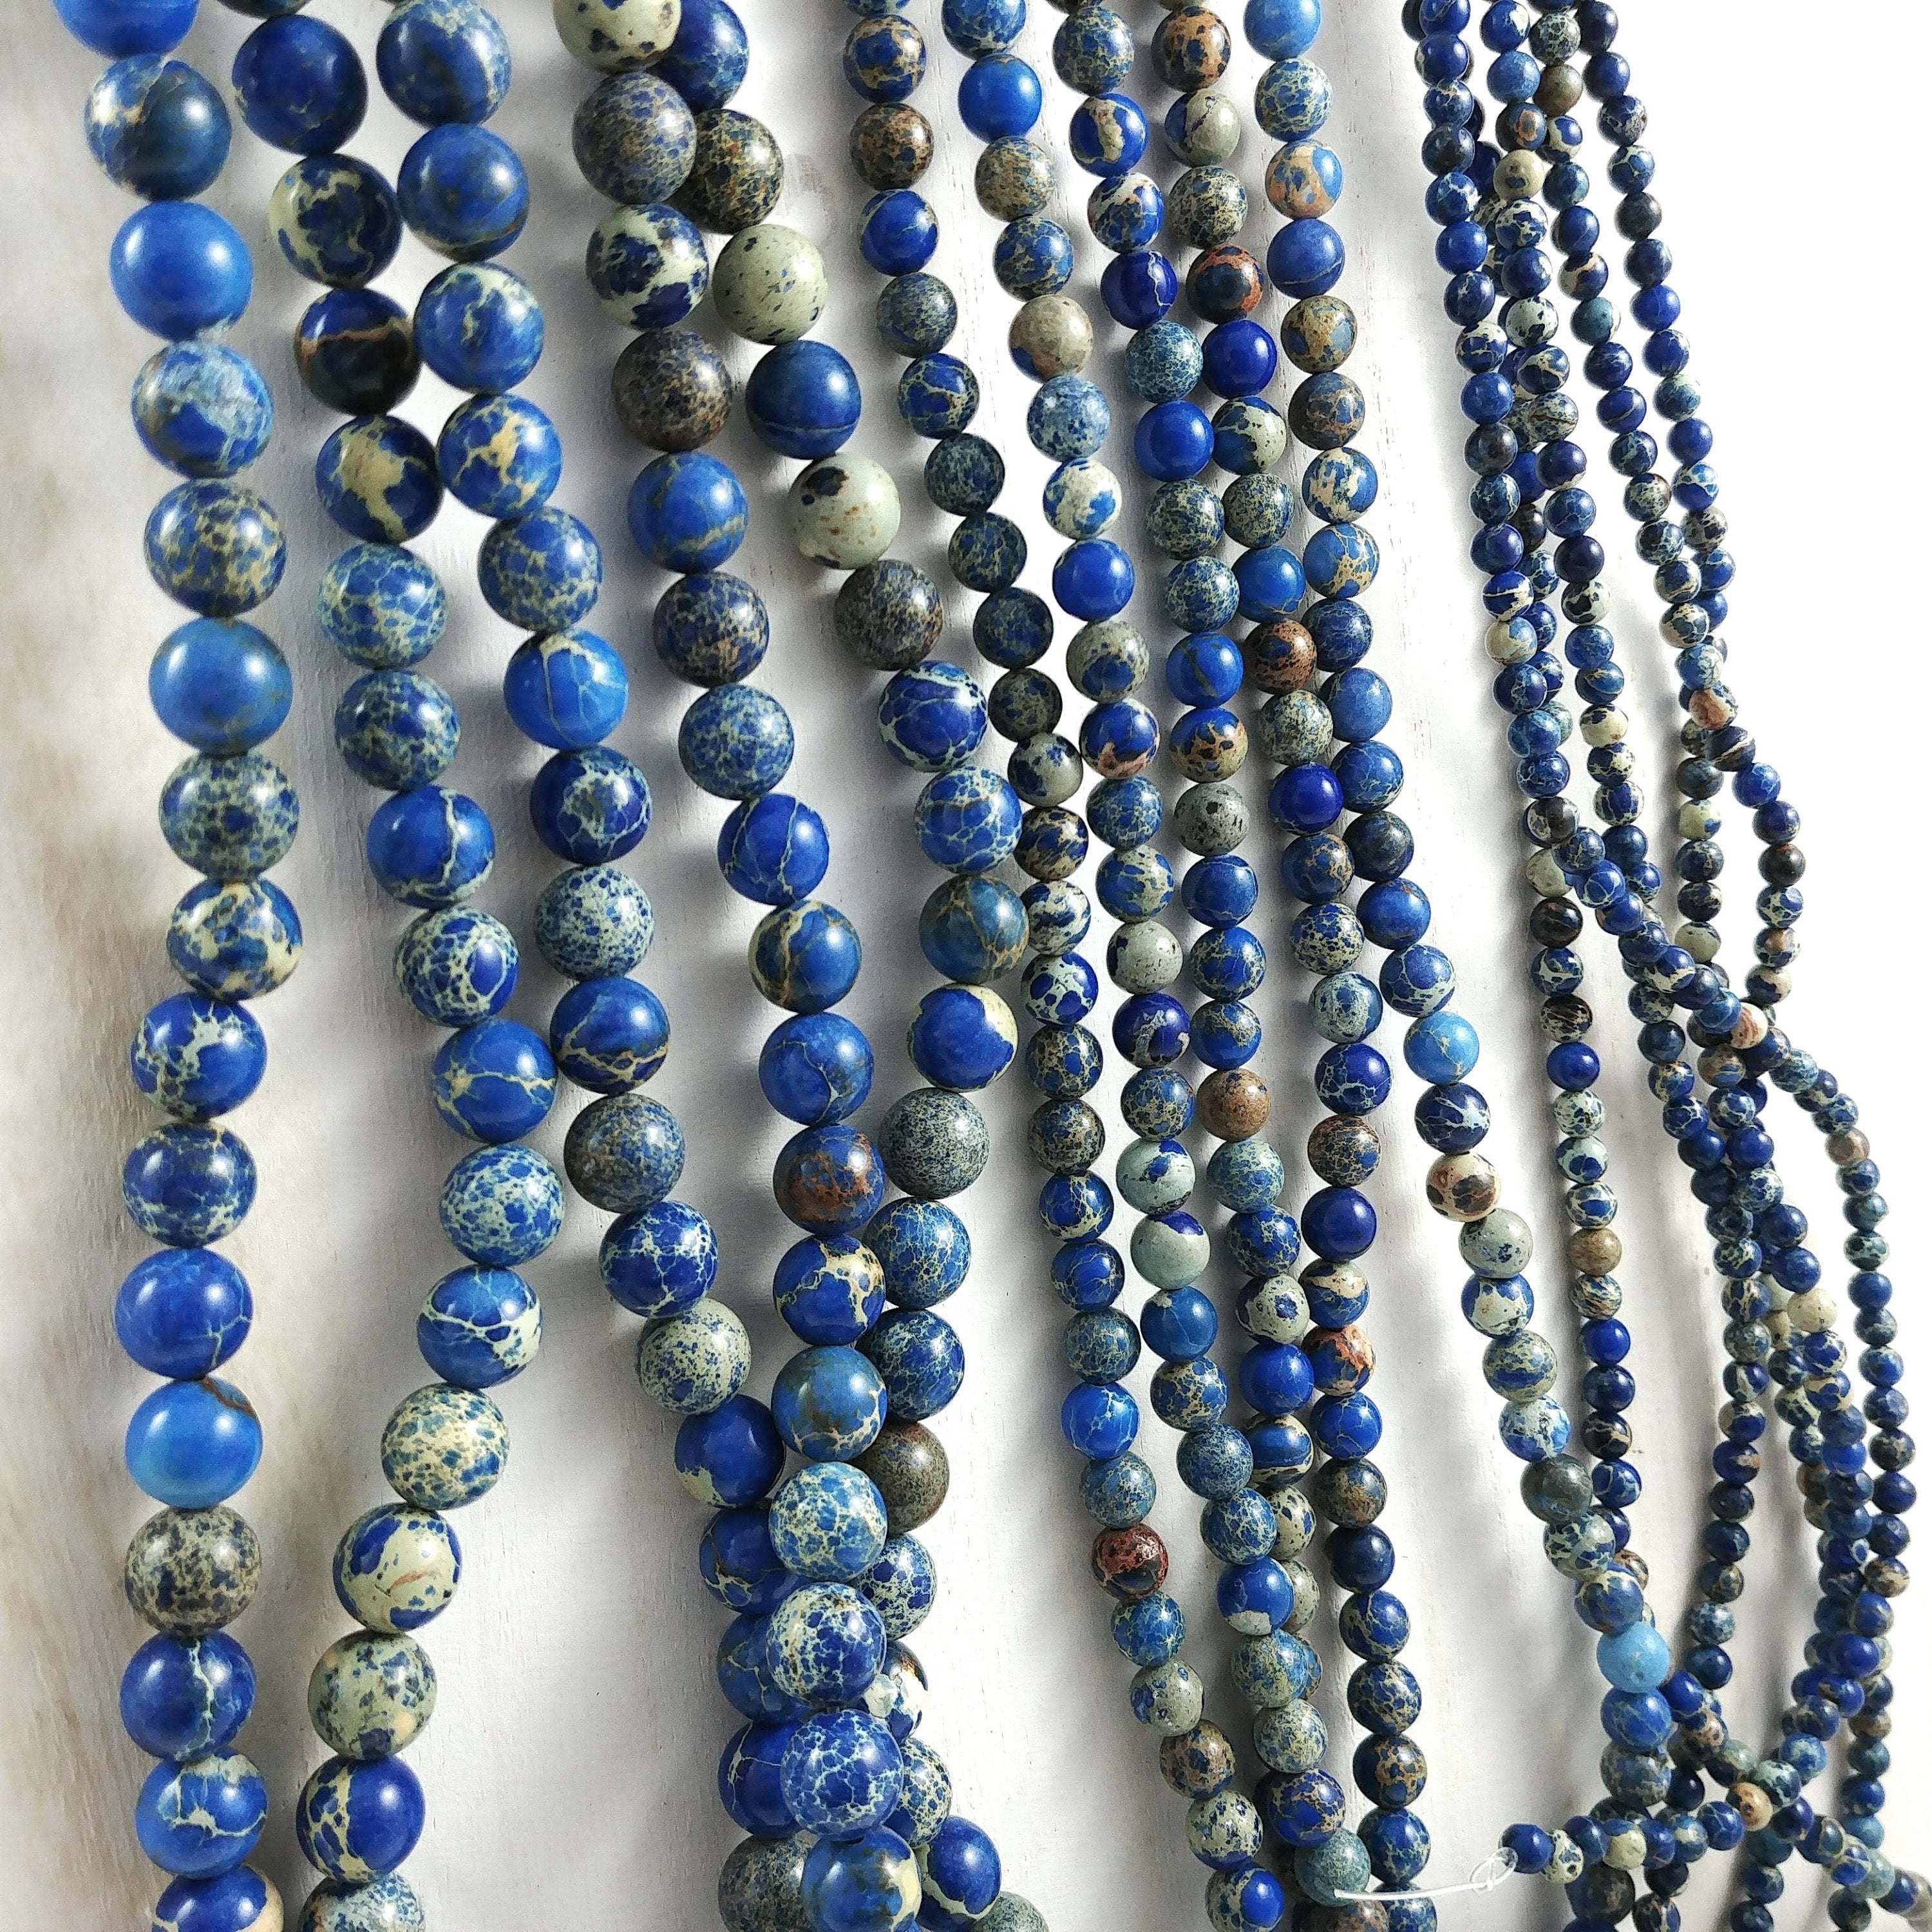 Blue imperial jasper gemstone beads, 4mm, 6mm, 8mm for jewelry making